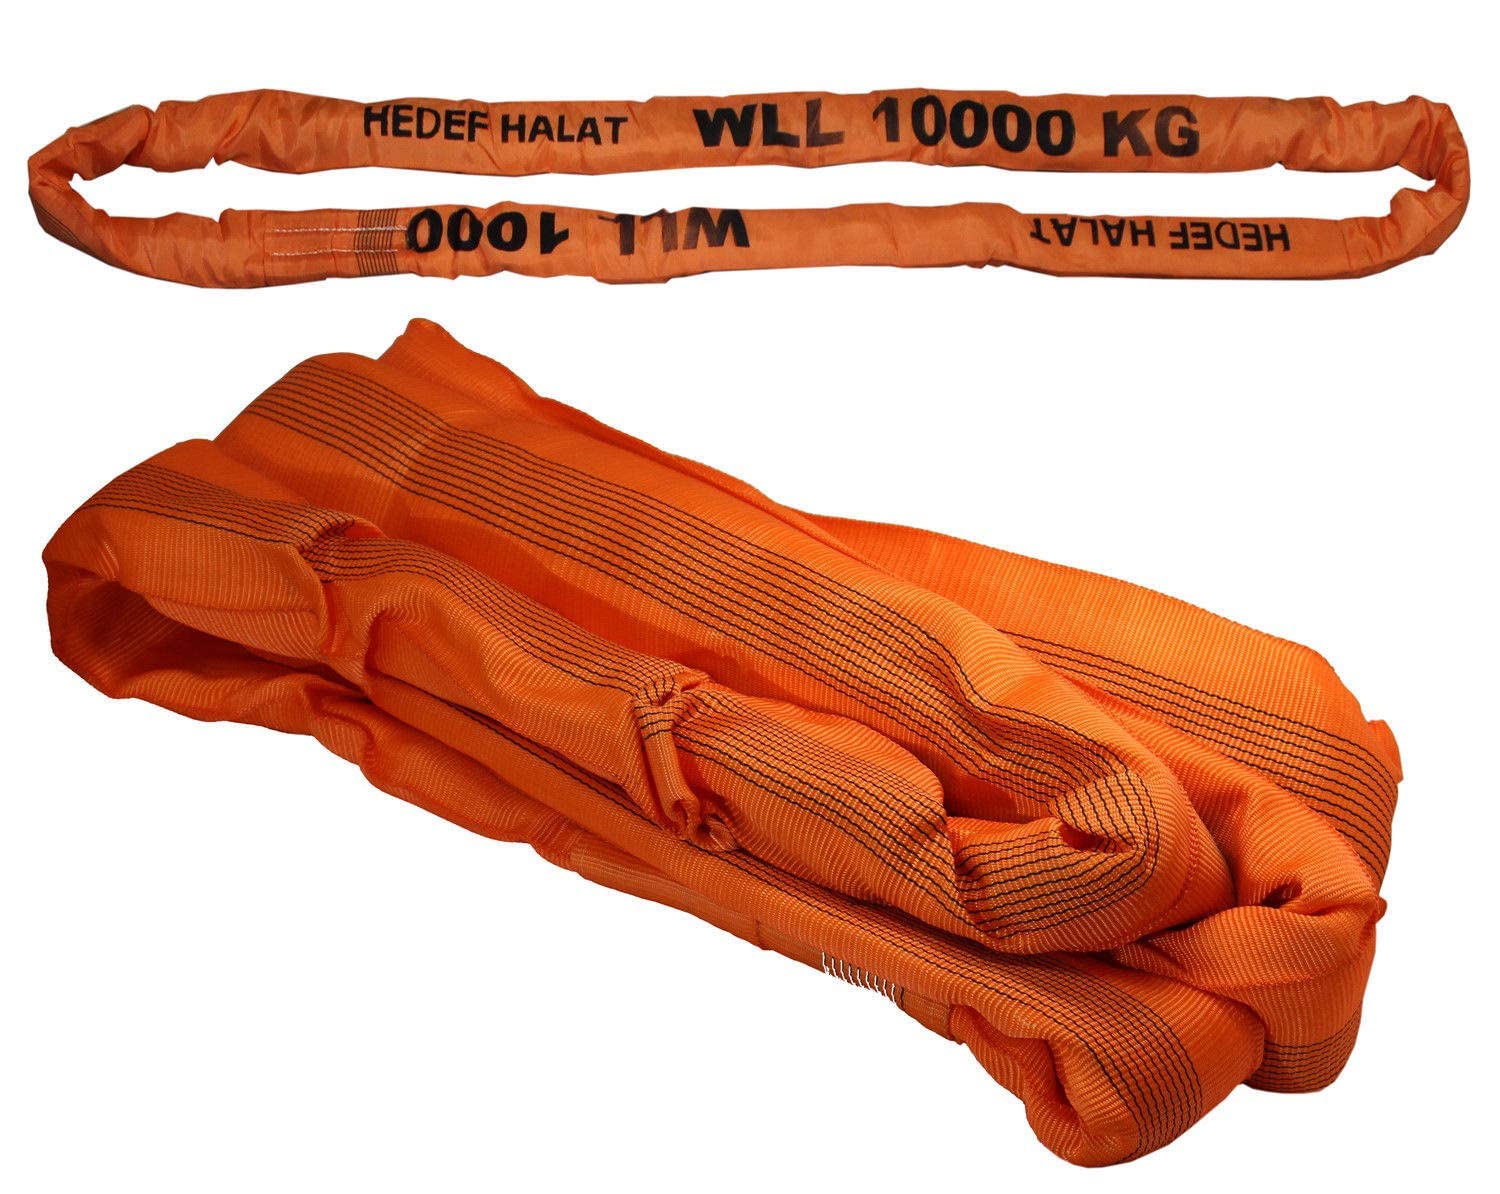 Rundschlinge 10000kg Tragkraft, 8m Umfang, endlos mit Polyesterkern, Hebegurt Hebeband, Orange